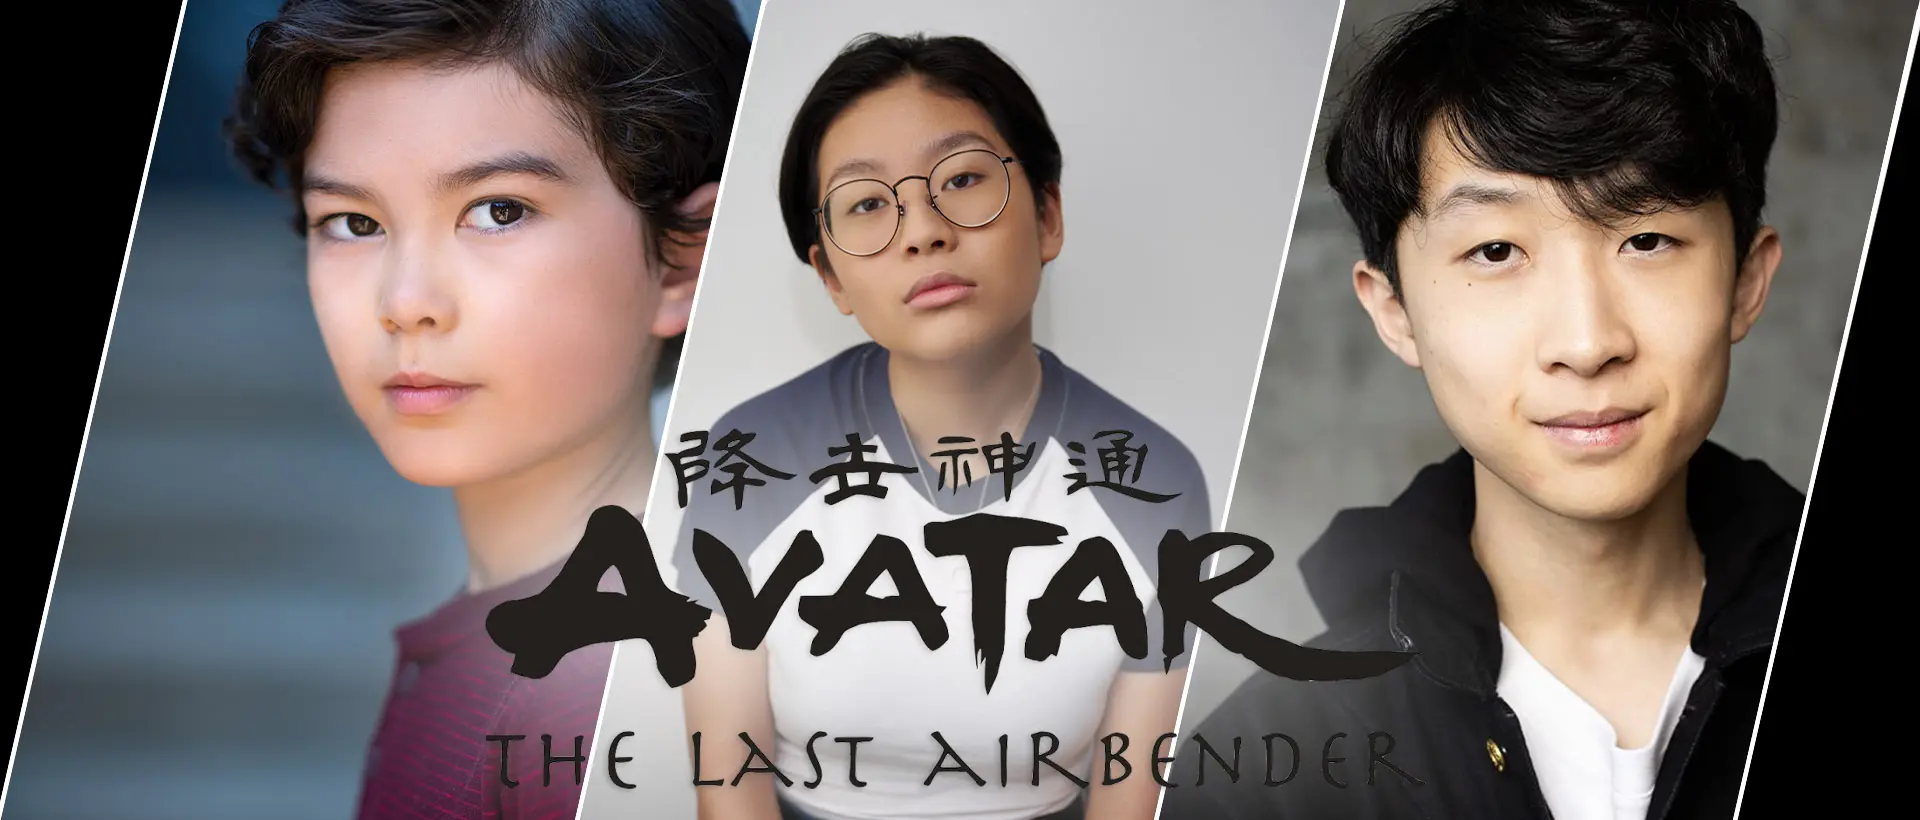 Netflix Announces Casting For Live Action Avatar The Last Airbender   Avatar The Last Airbender Casting Dallas Liu Gordon Cormier Ian Ousley  Kiawentiio Netflix Television  Just Jared Jr